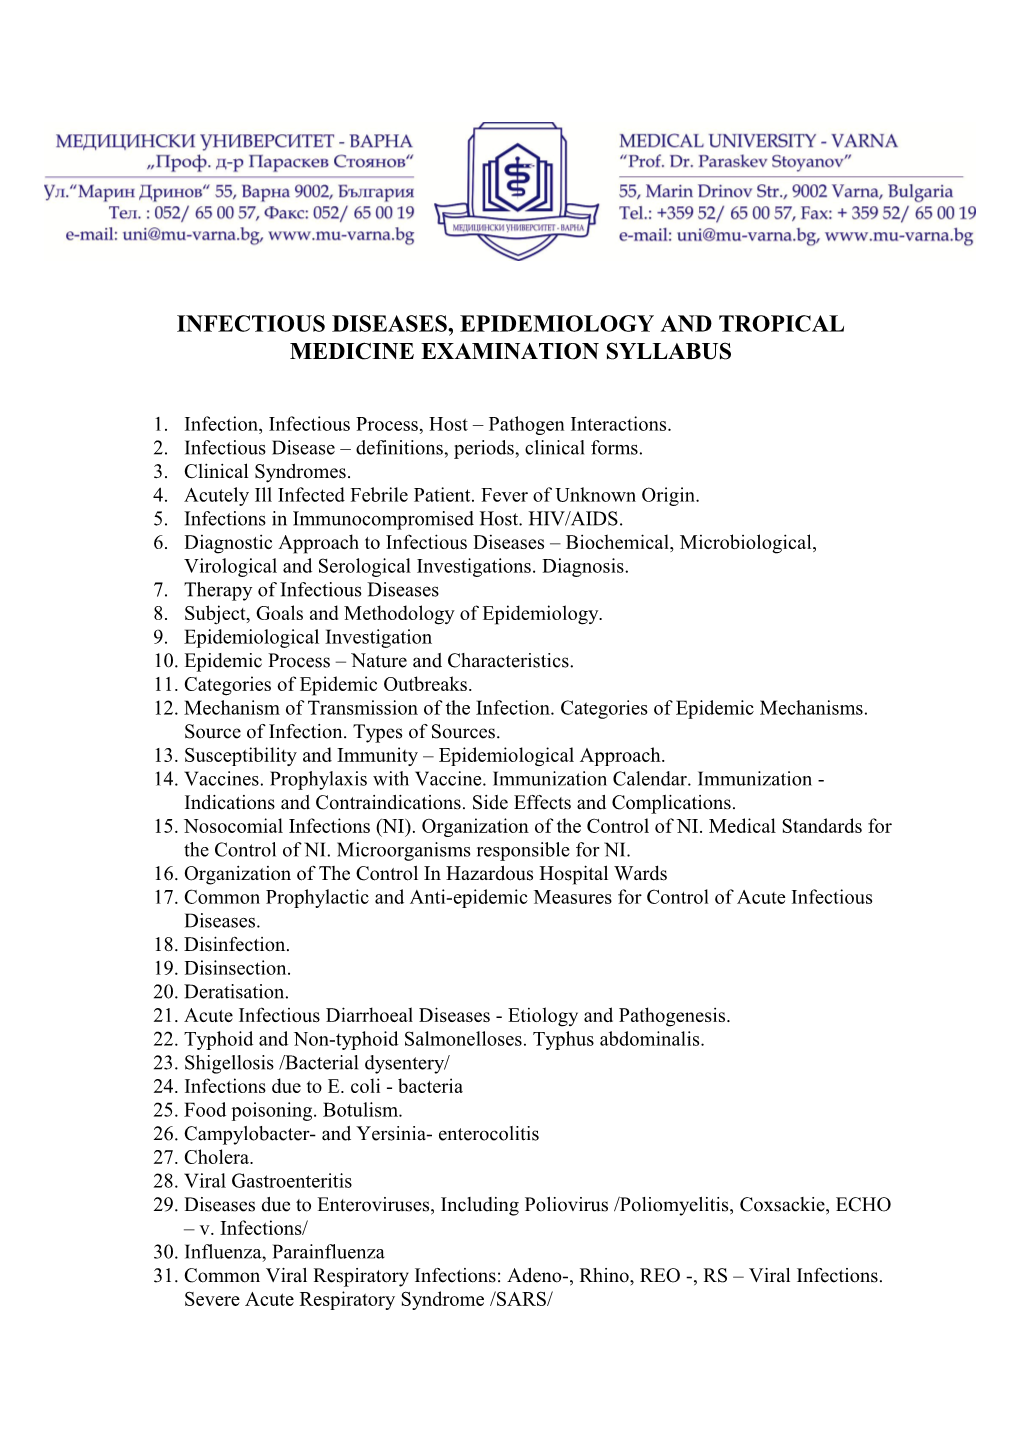 Infectious Diseases, Epidemiology and Tropical Medicine Examination Syllabus